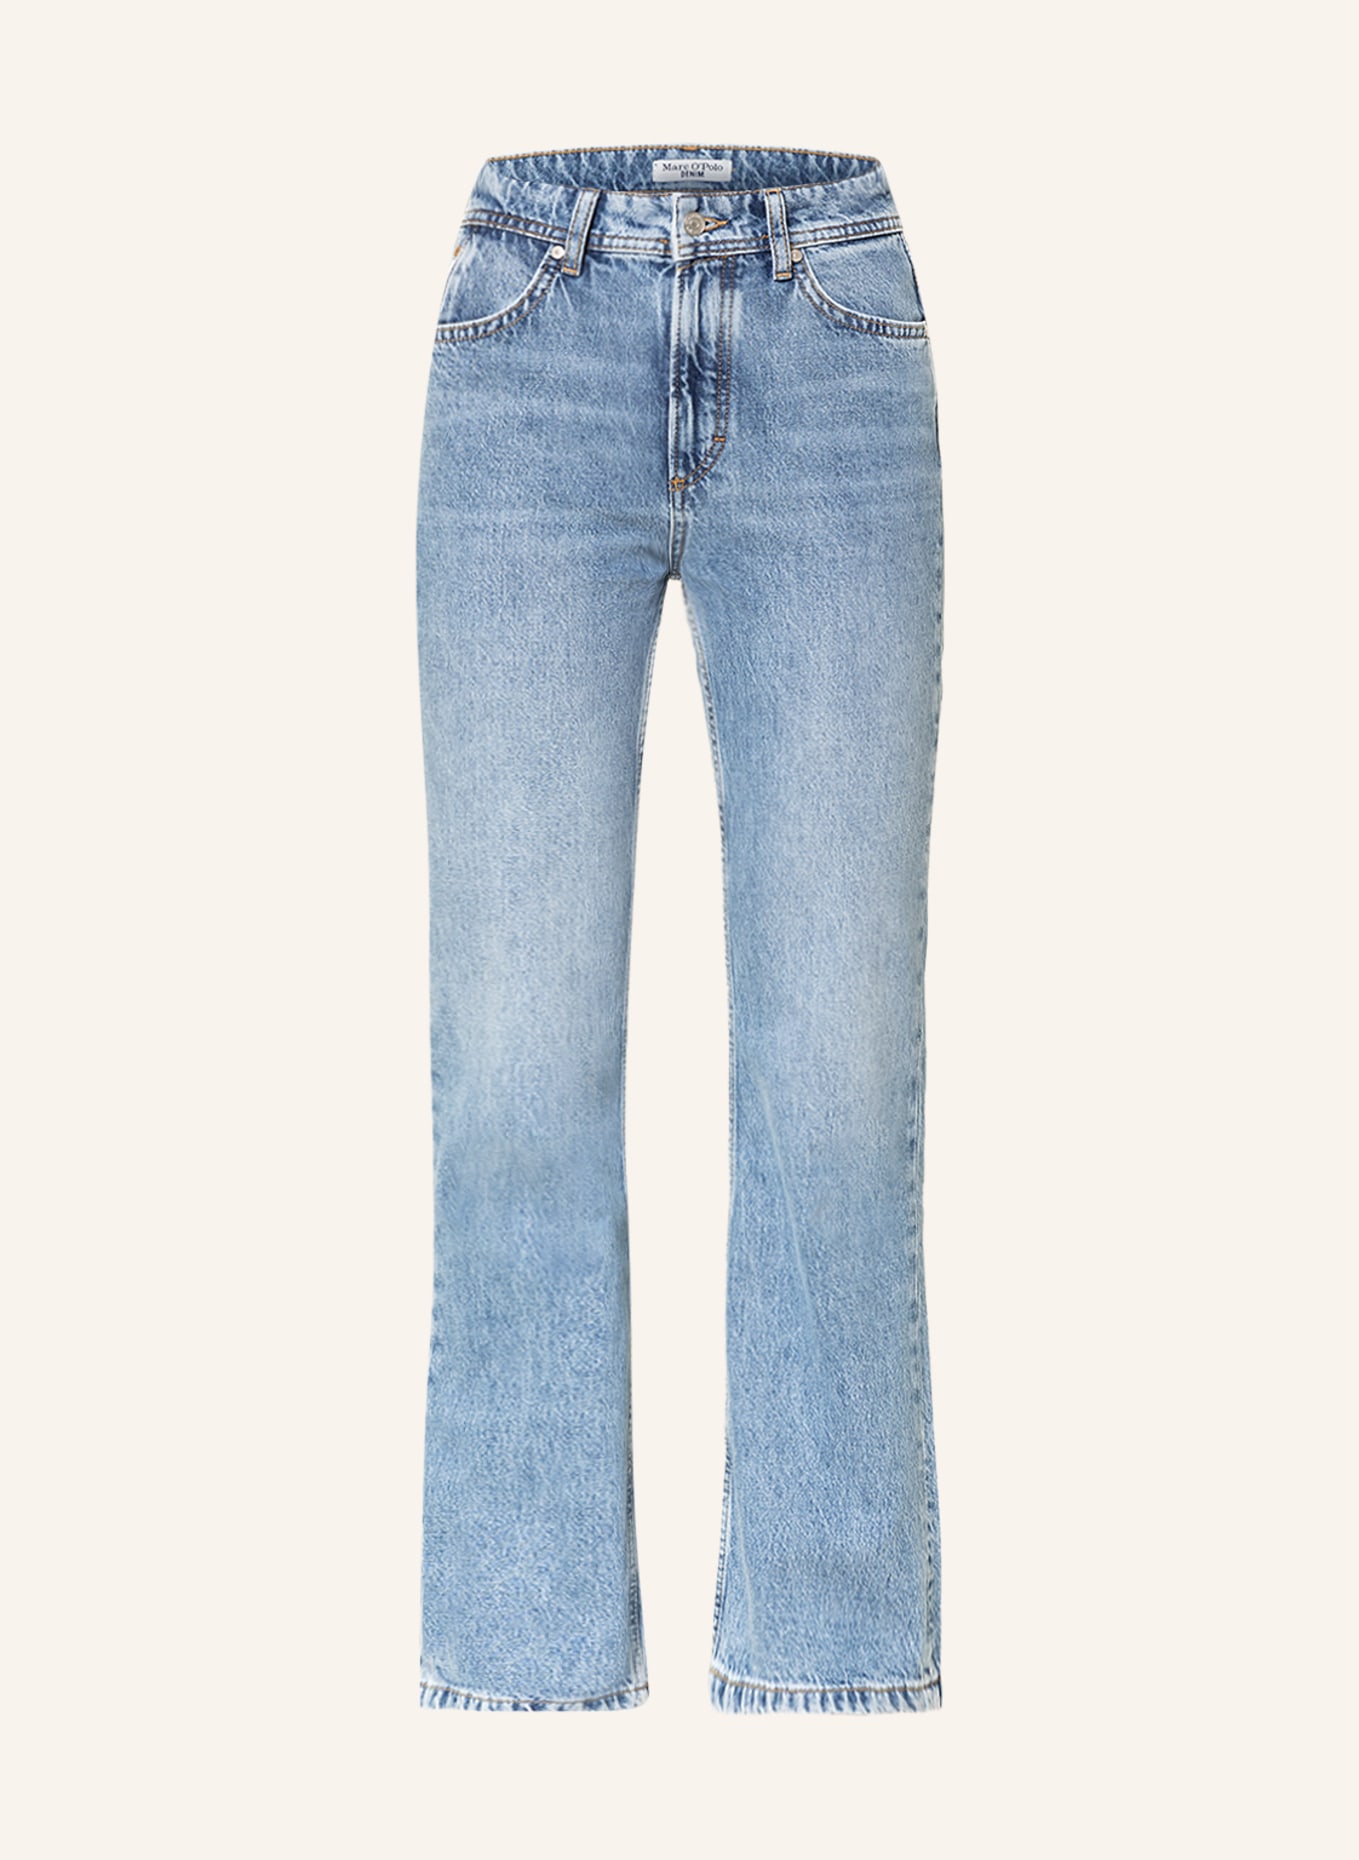 Marc O'Polo DENIM Flared Jeans, Farbe: P71 multi/authentic worn light blu (Bild 1)